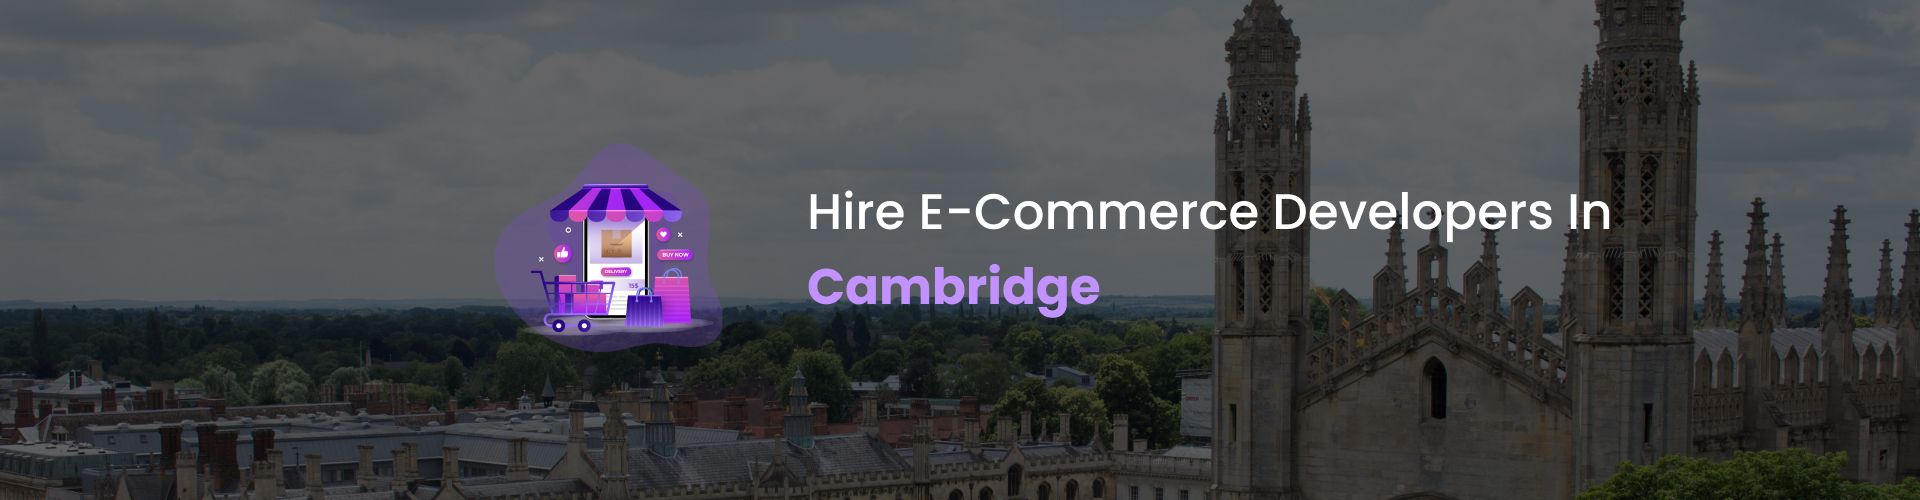 hire ecommerce developers in cambridge